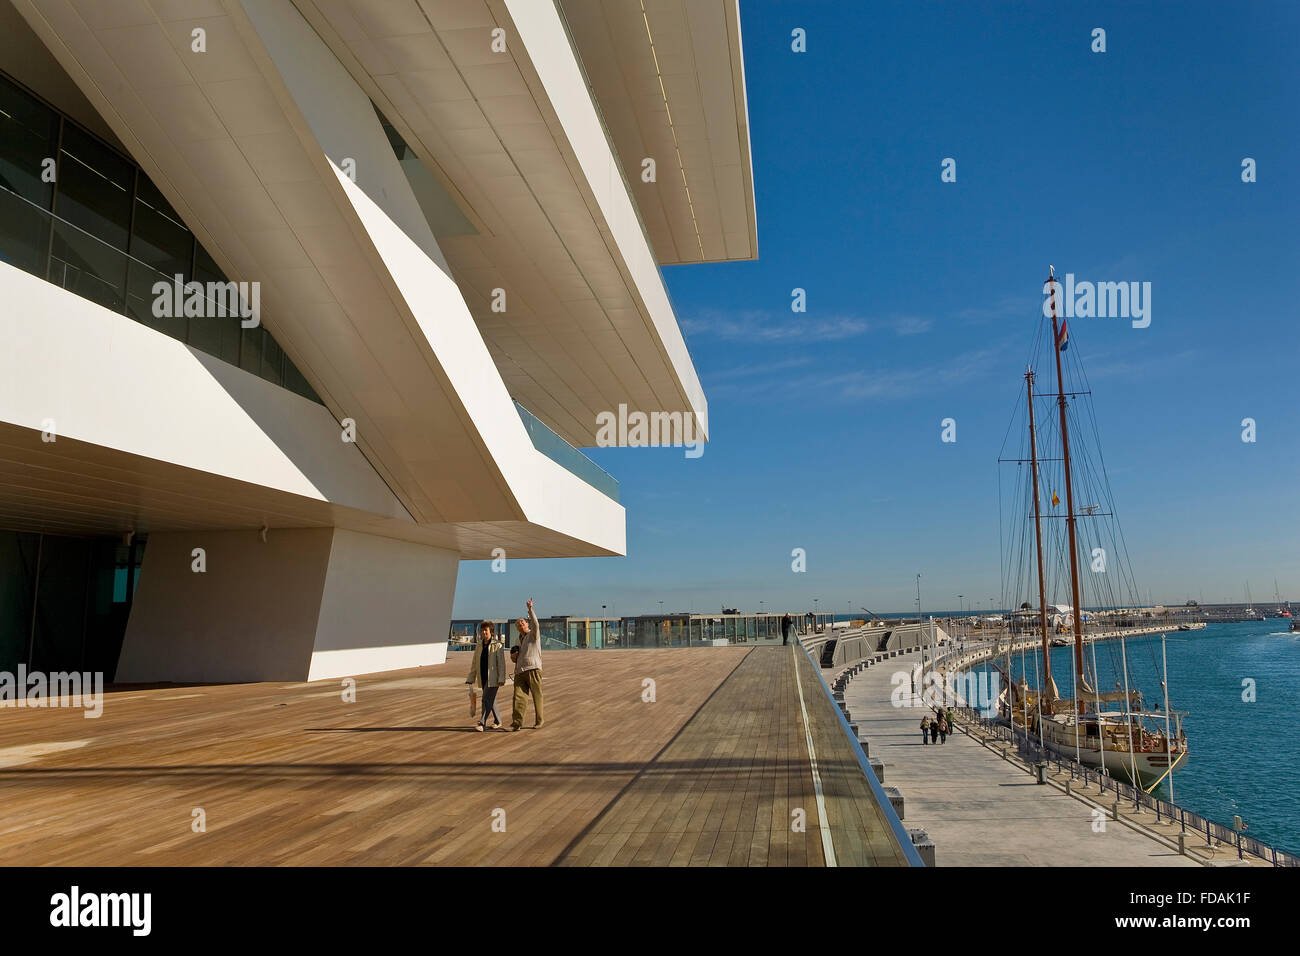 Veles e Vents, building by David Chipperfield, Port Americas Cup, Valencia, Spain Stock Photo